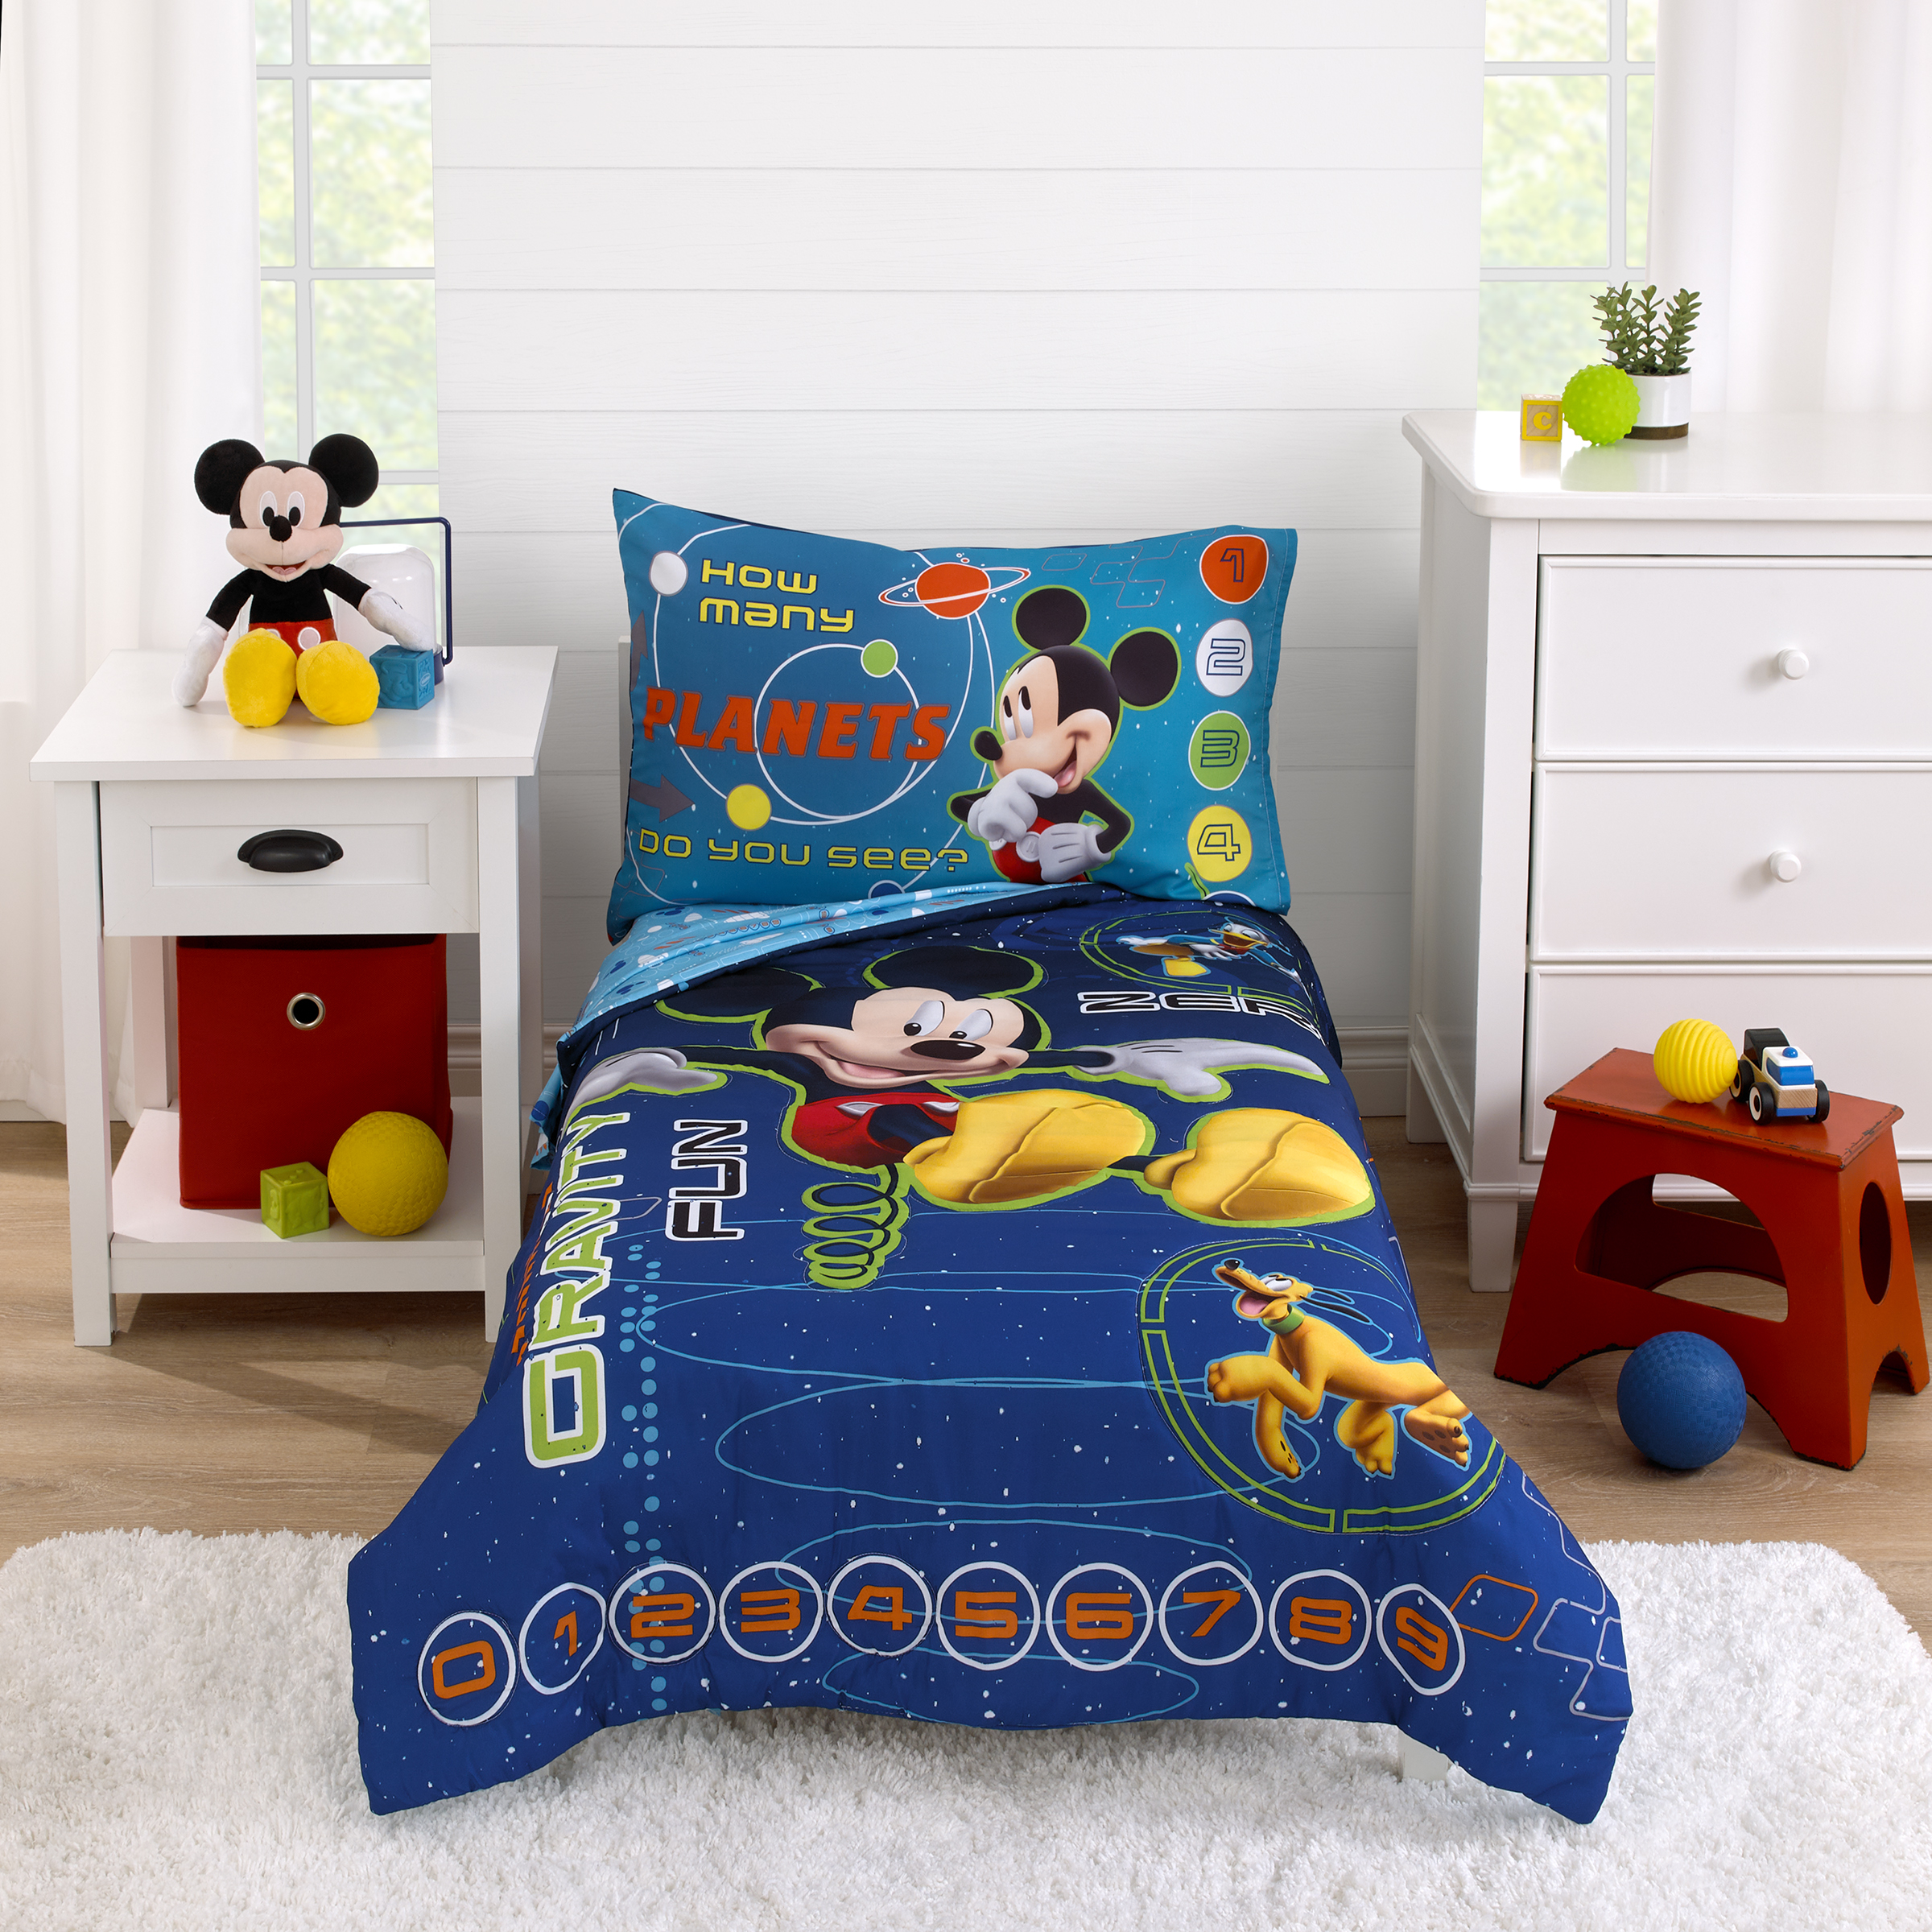 Disney Mickey Mouse Zero Gravity Toddler Bedding Set, Blue, 4-Piece - image 1 of 10